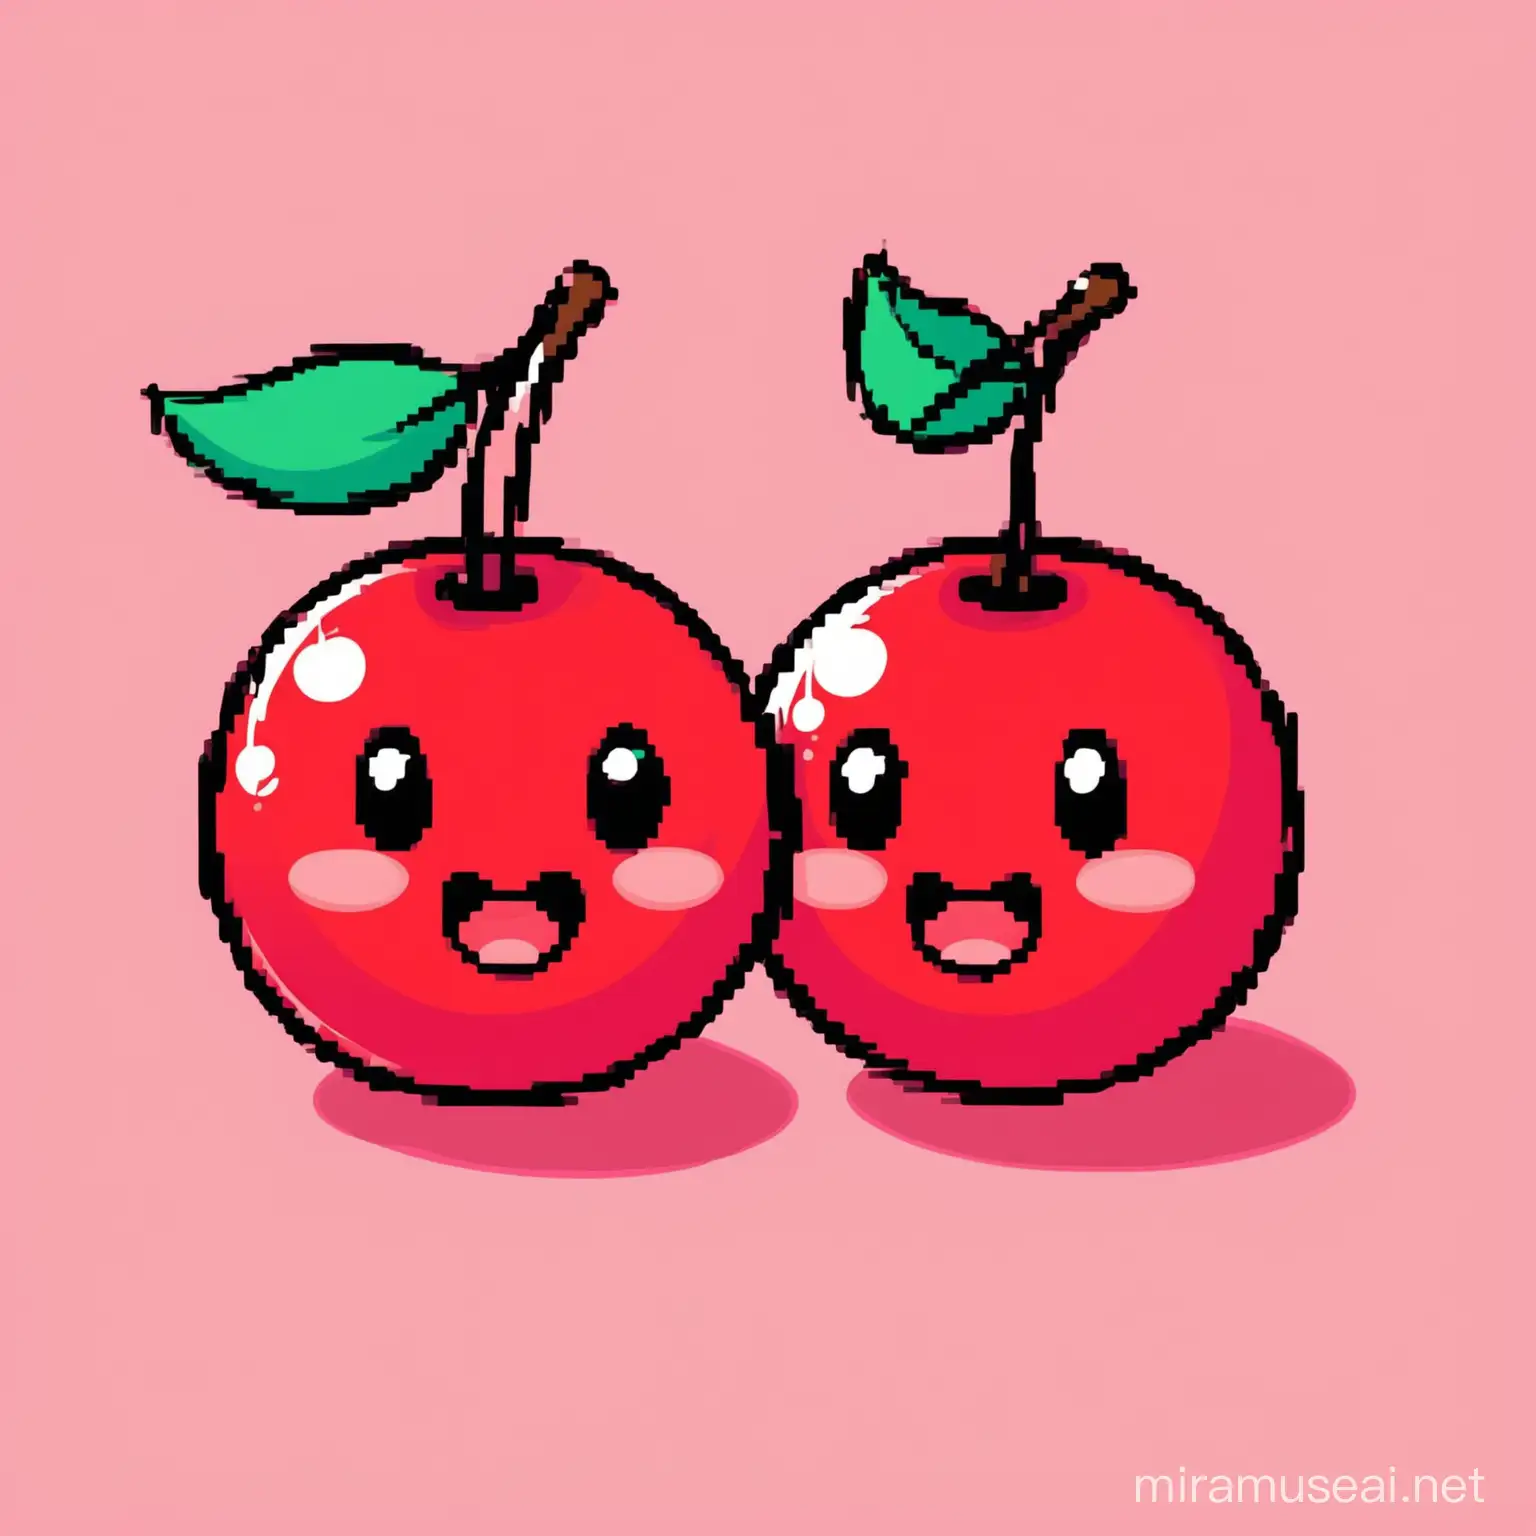 A pair of cherry, cute, vector digital illustration